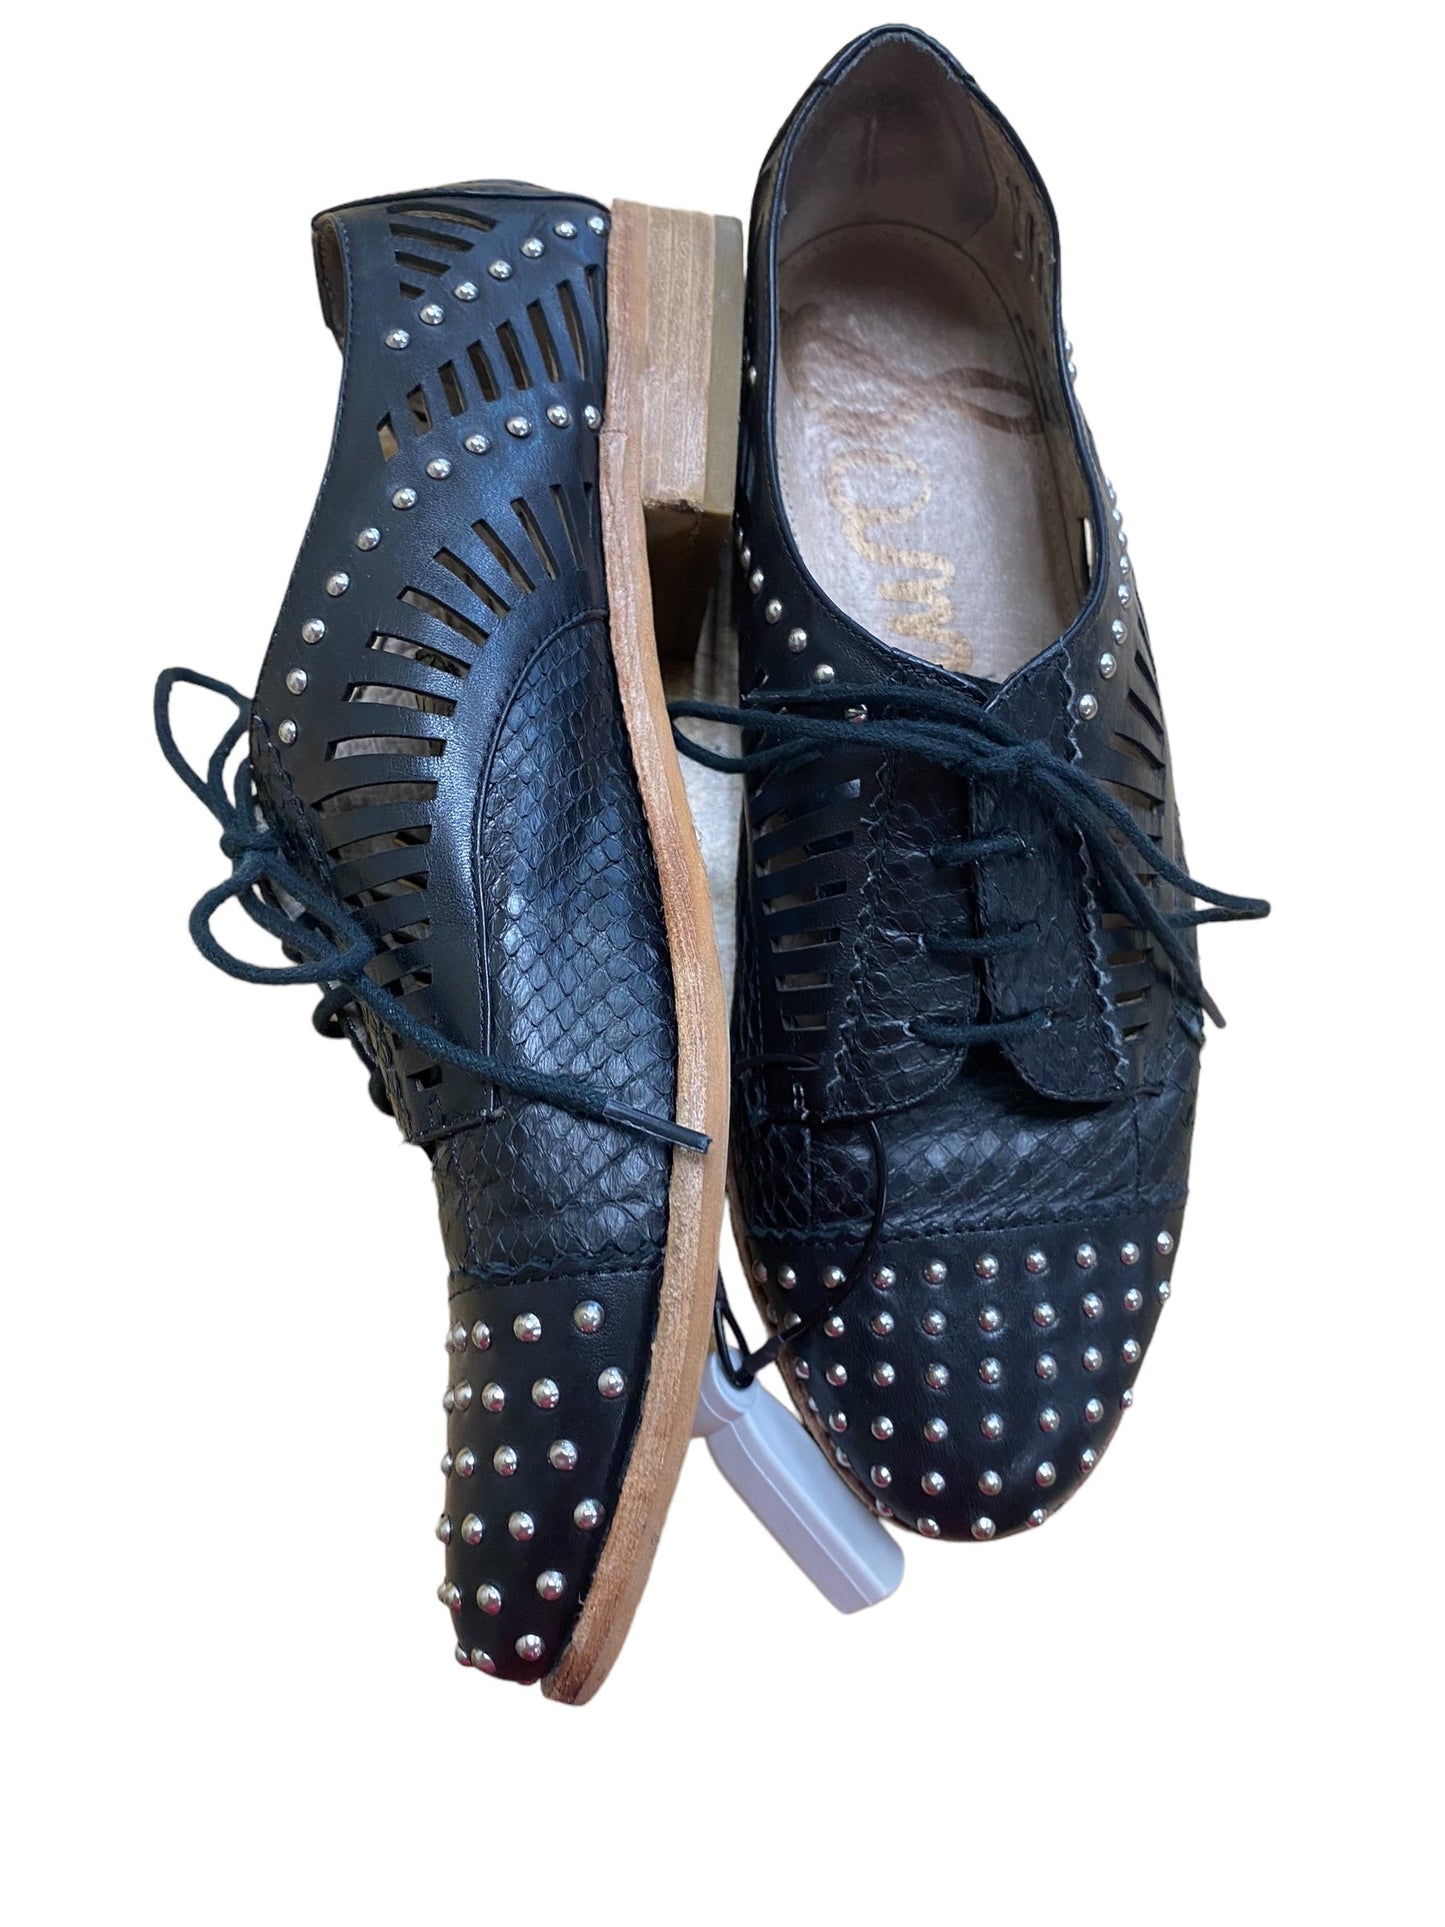 Black Shoes Flats Sam Edelman, Size 8